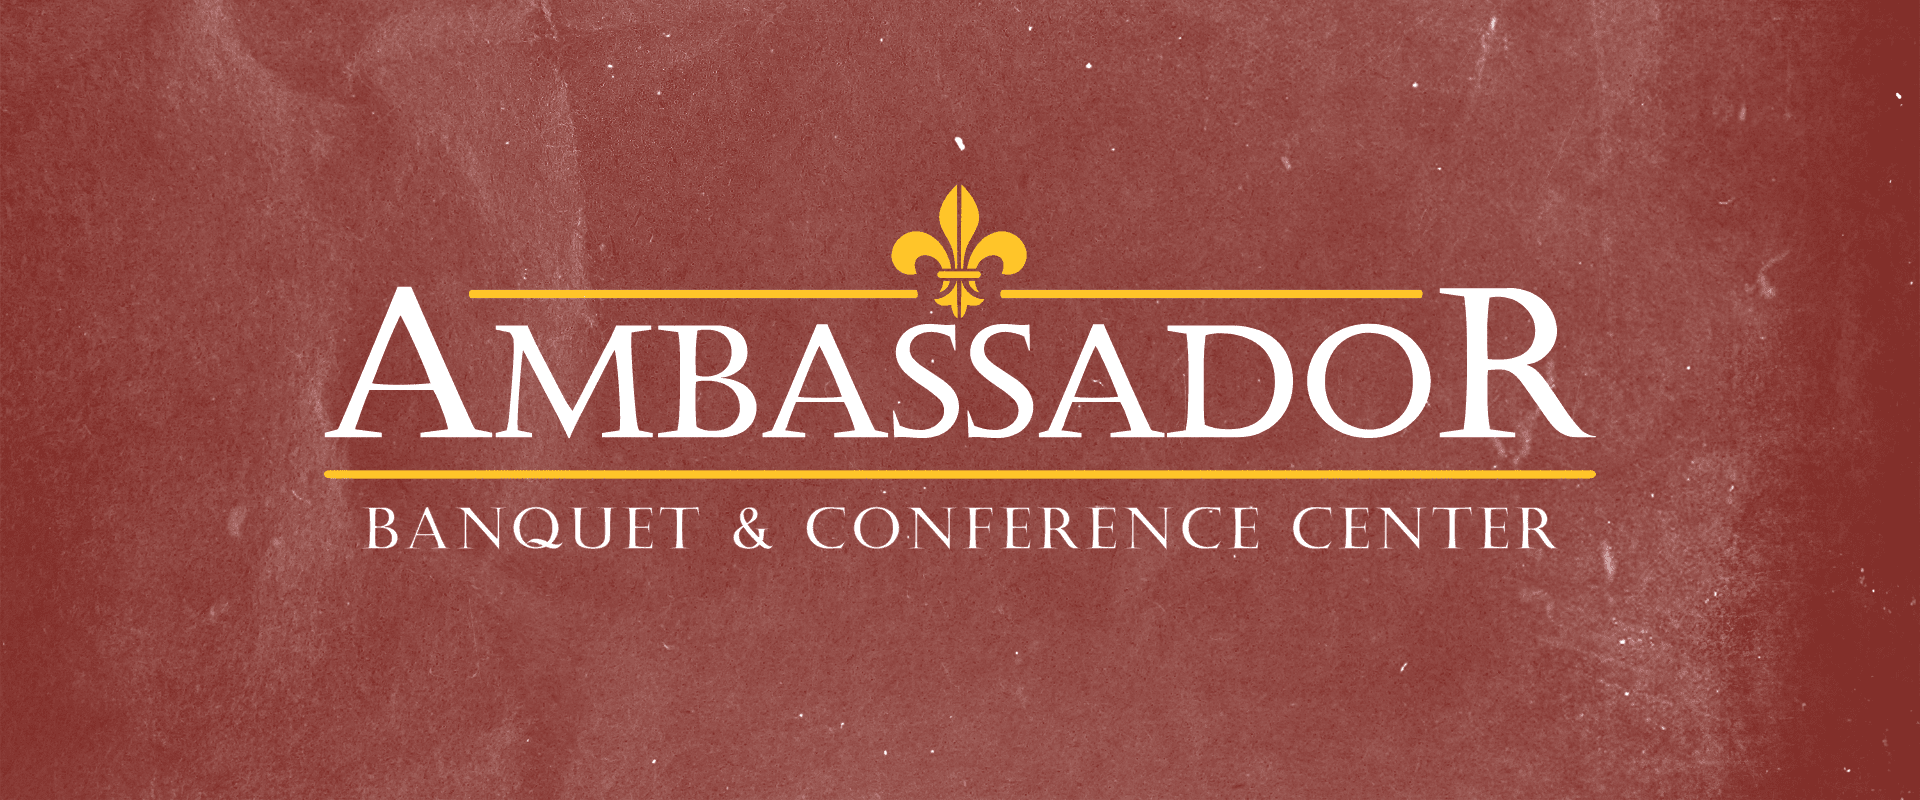 Ambassador Banquet & Conference Center